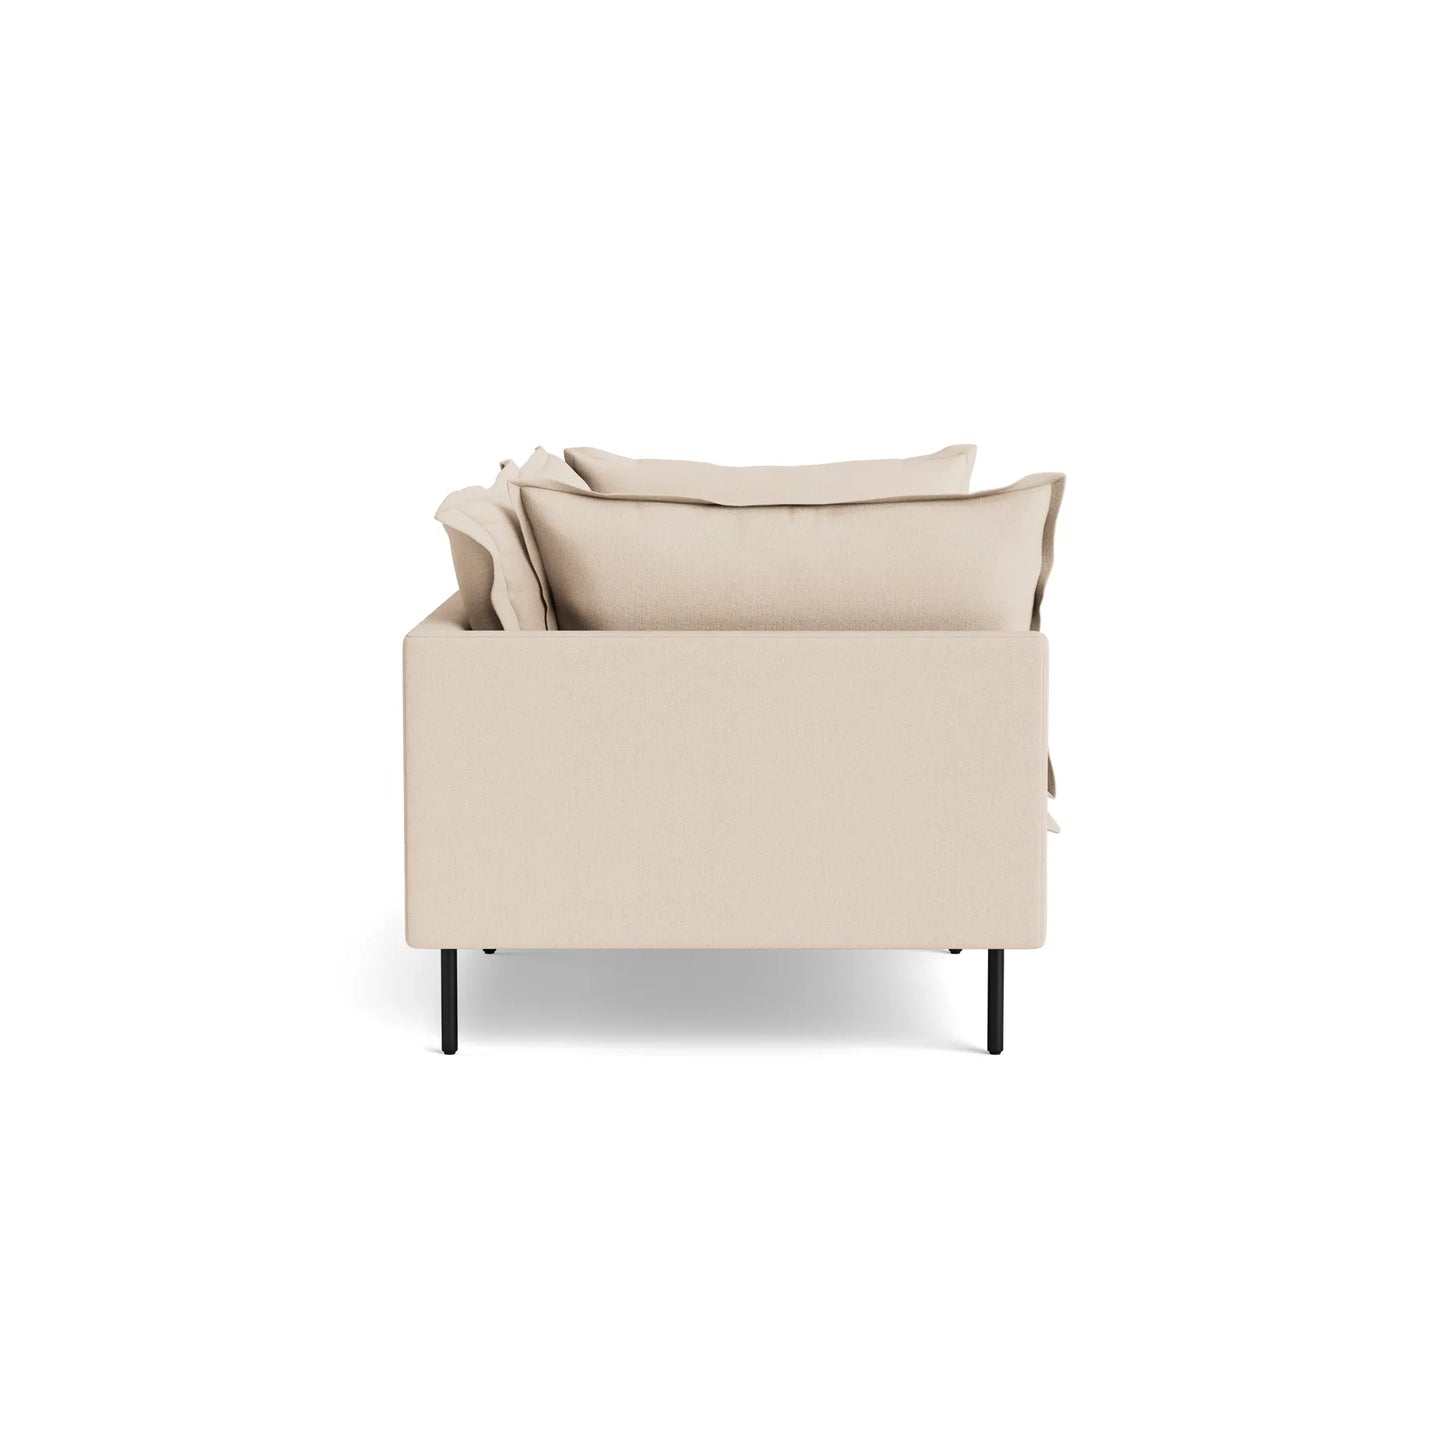 Seam 3 Seater Sofa - Siena Sand